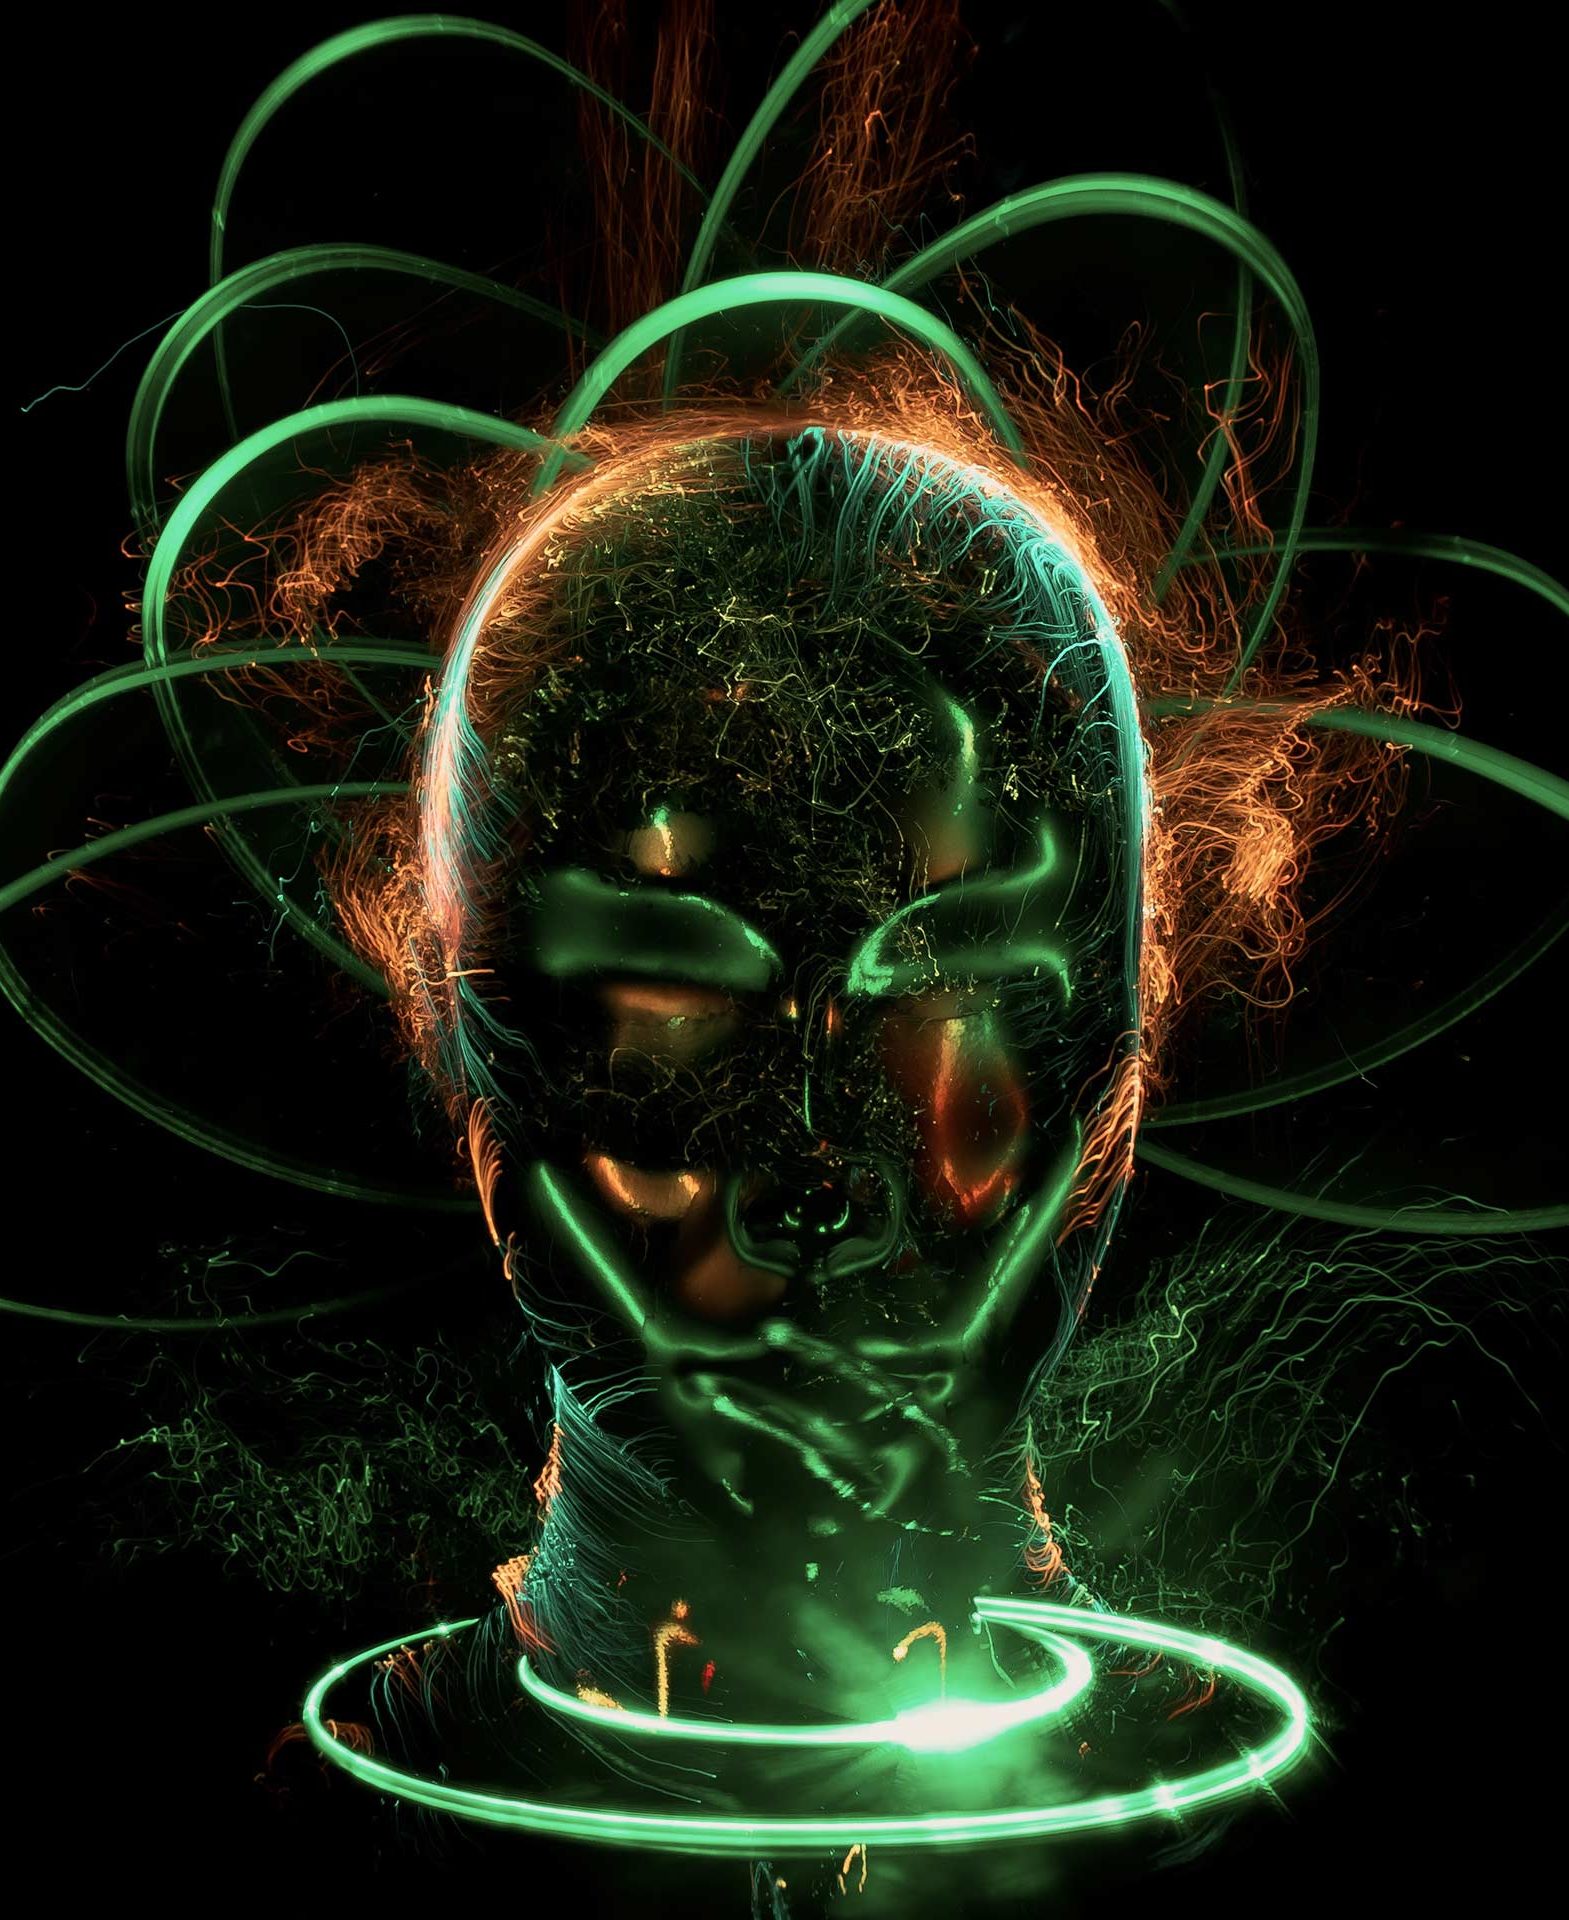 abstract green lights circle a 3d metallic head